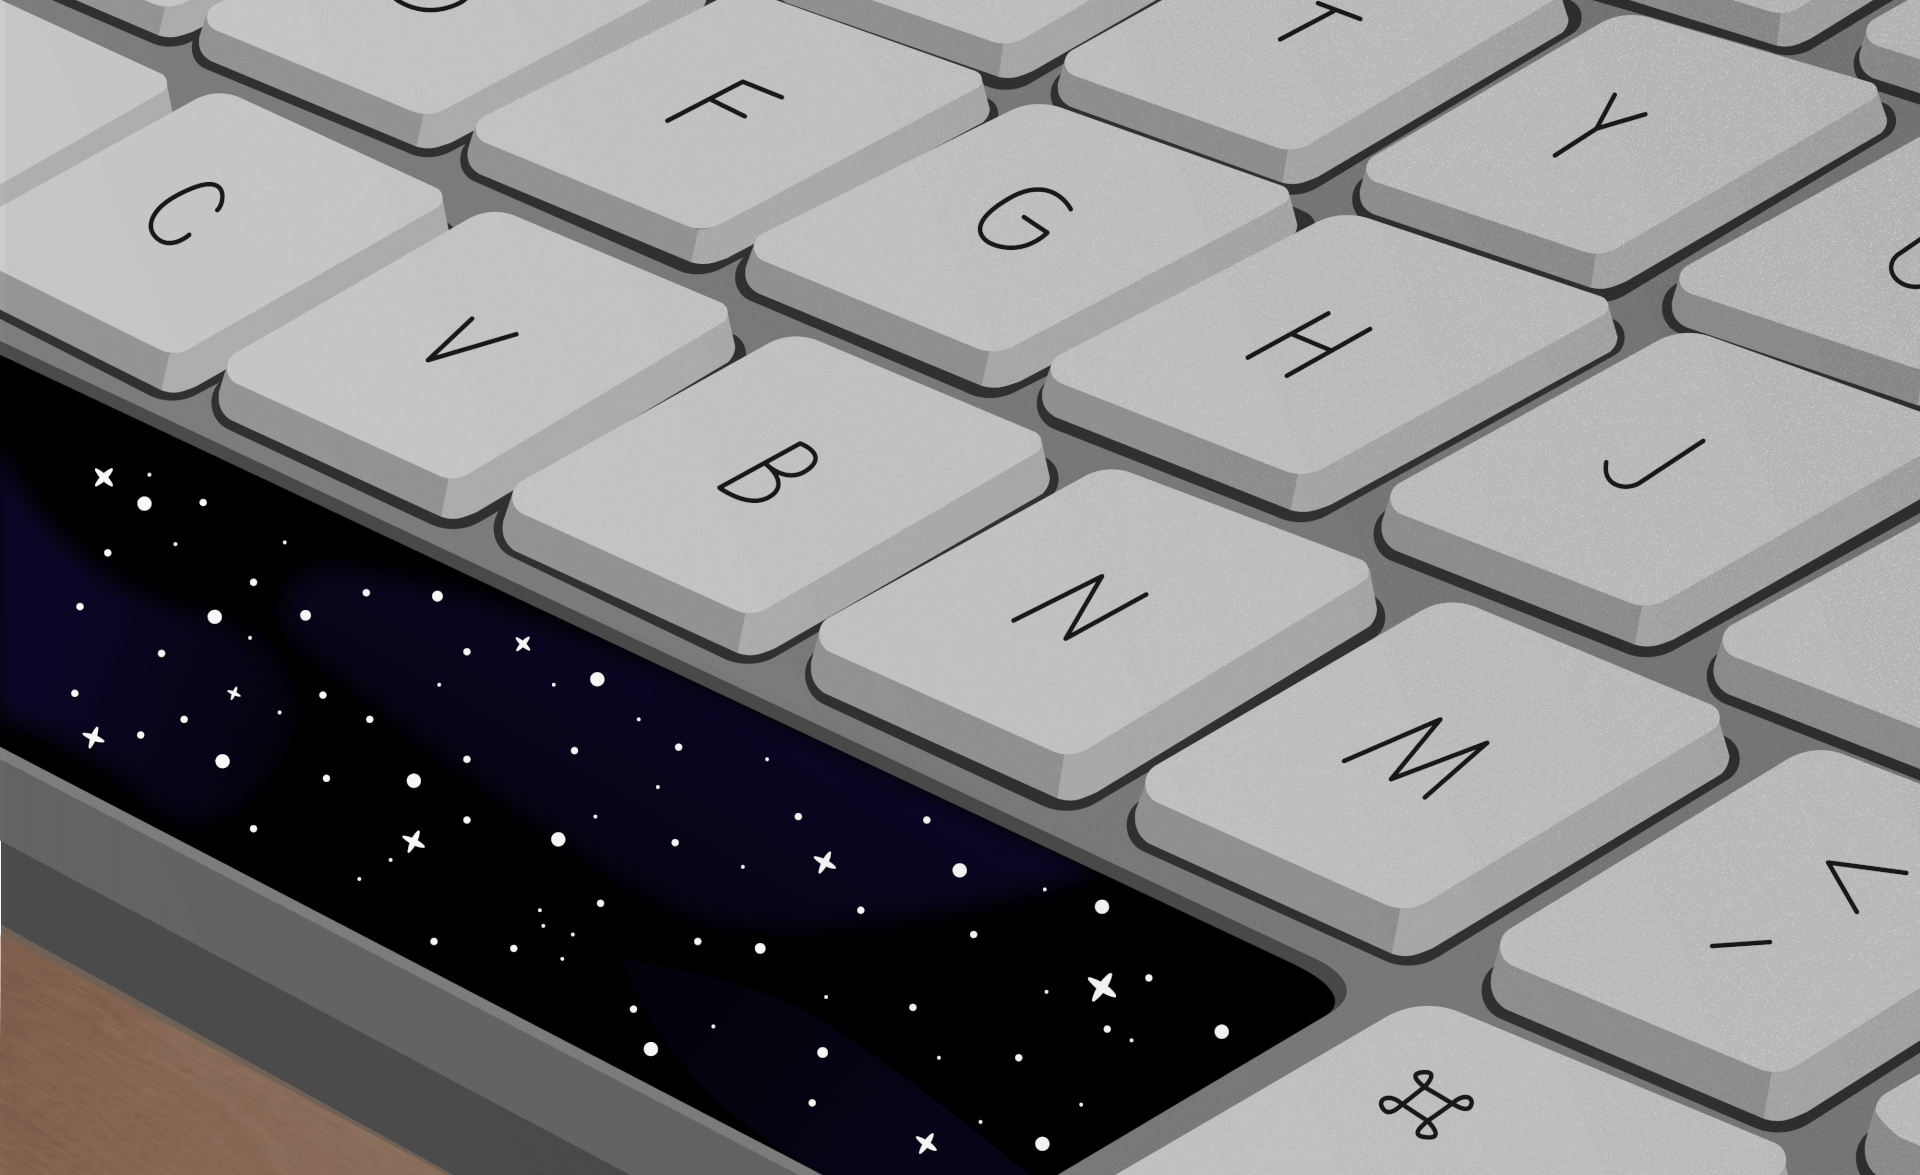 Keyboard_Space_Web-10-10